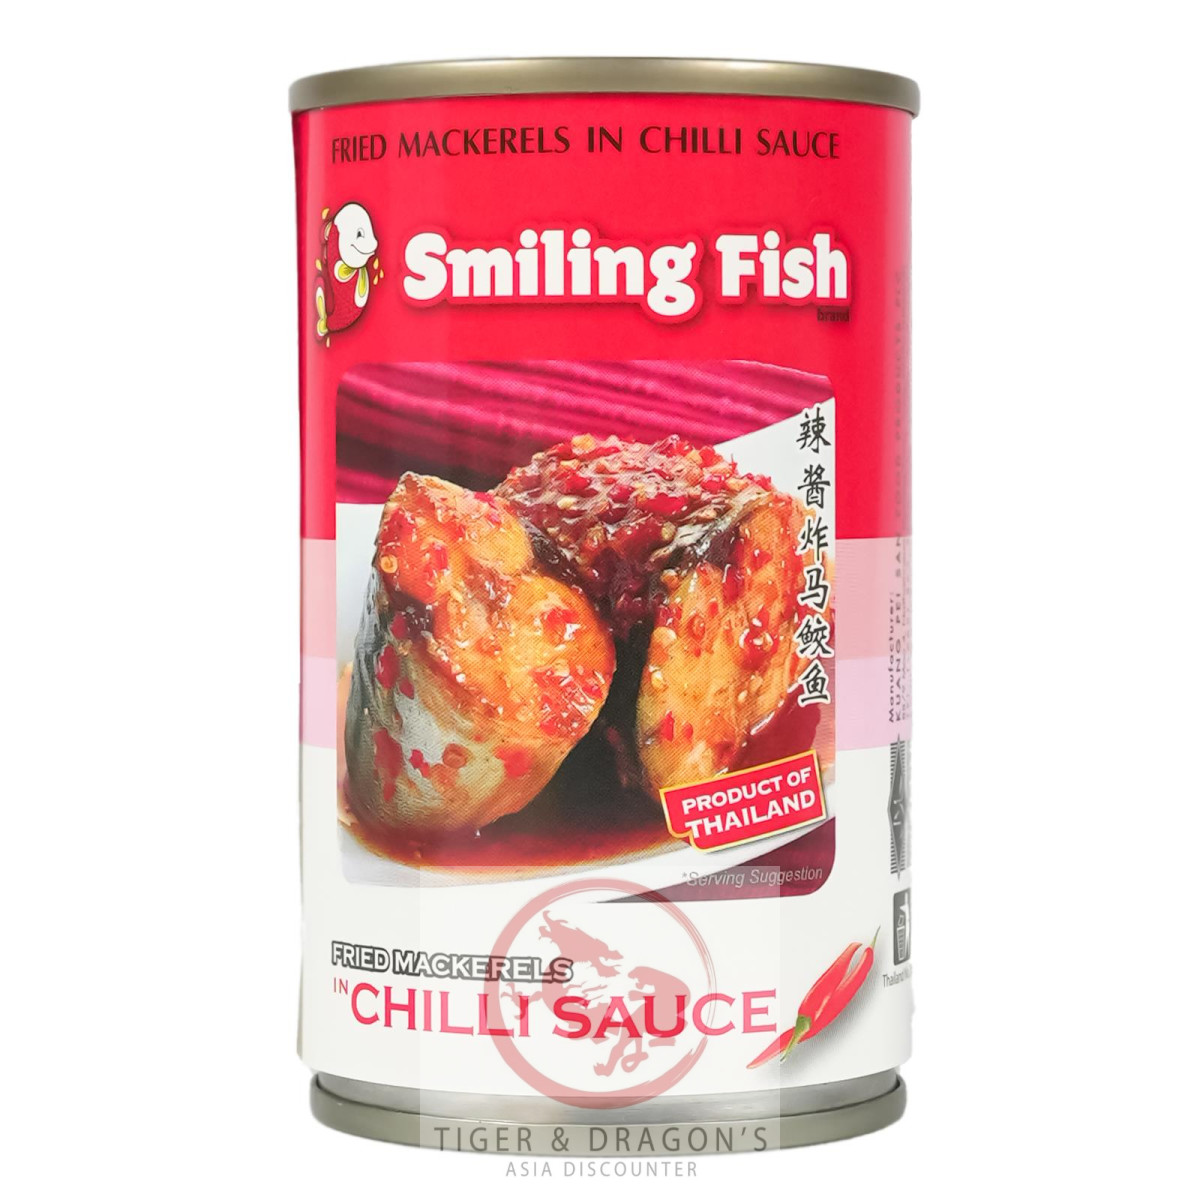 Smiling Fish Gebratene Makrele mit Chili 155g